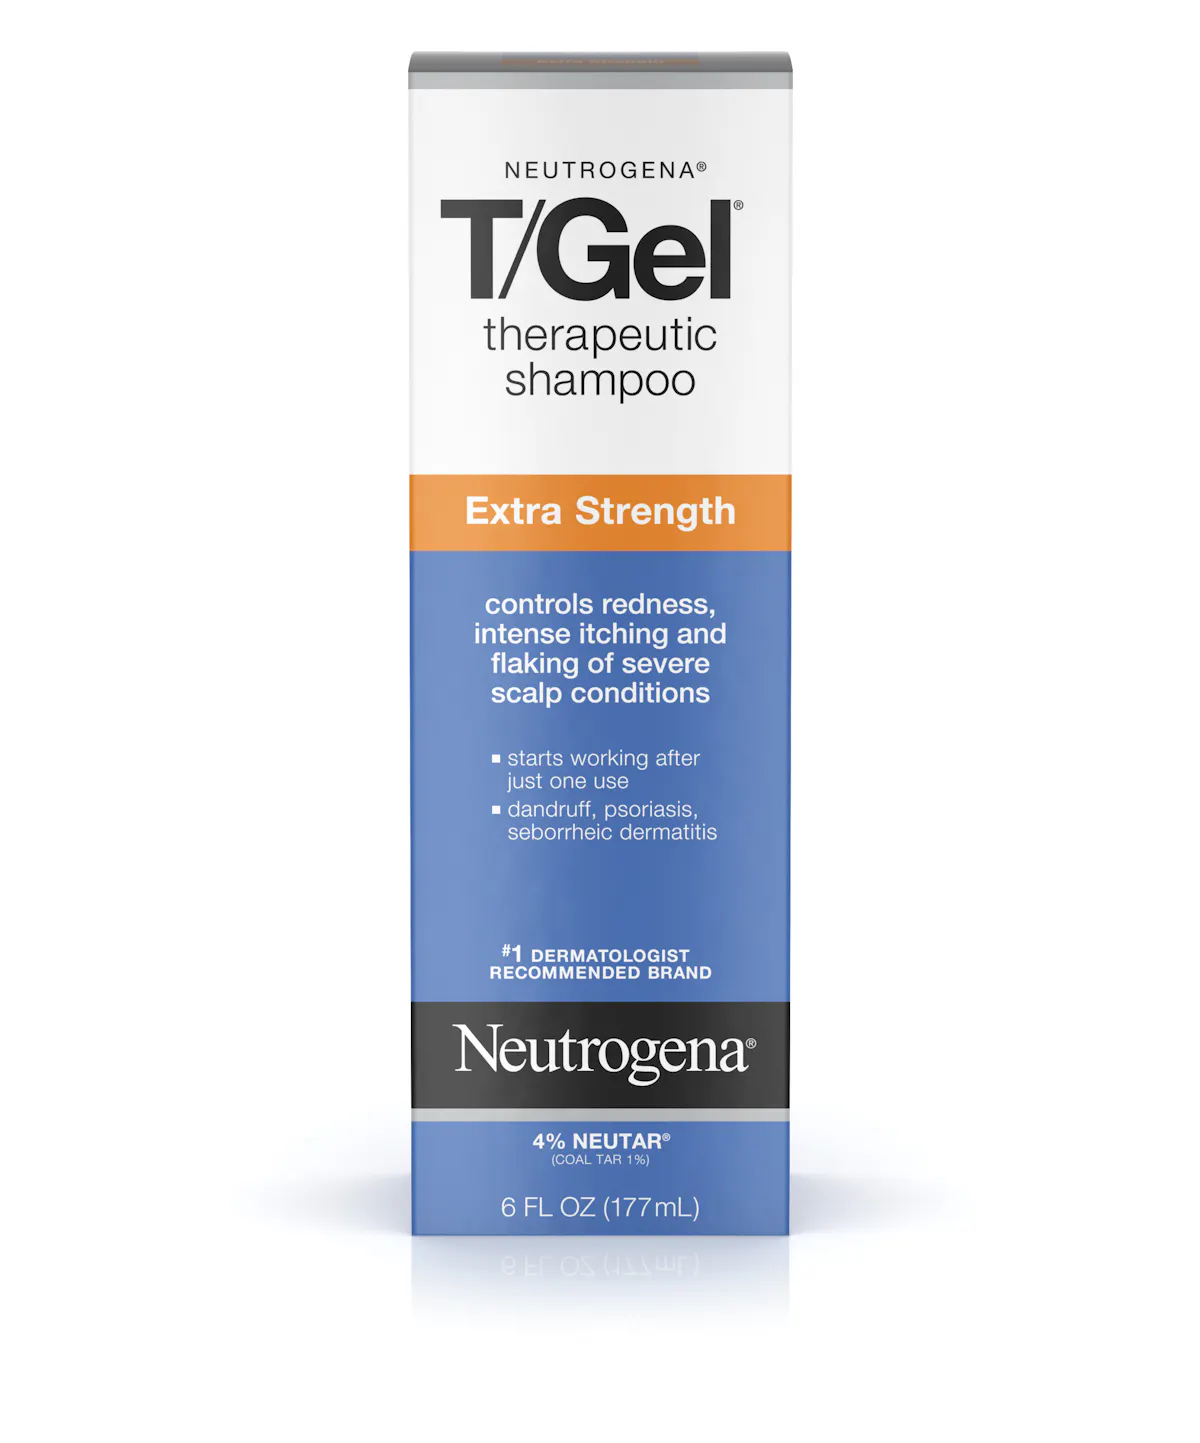 Gel neutrogena. Neutrogena t/Gel Therapeutic Shampoo. Шампунь т гель t/Gel Neutrogena. Шампунь Neutrogena, t/Gel деготь. Шампунь против перхоти нитроджина.